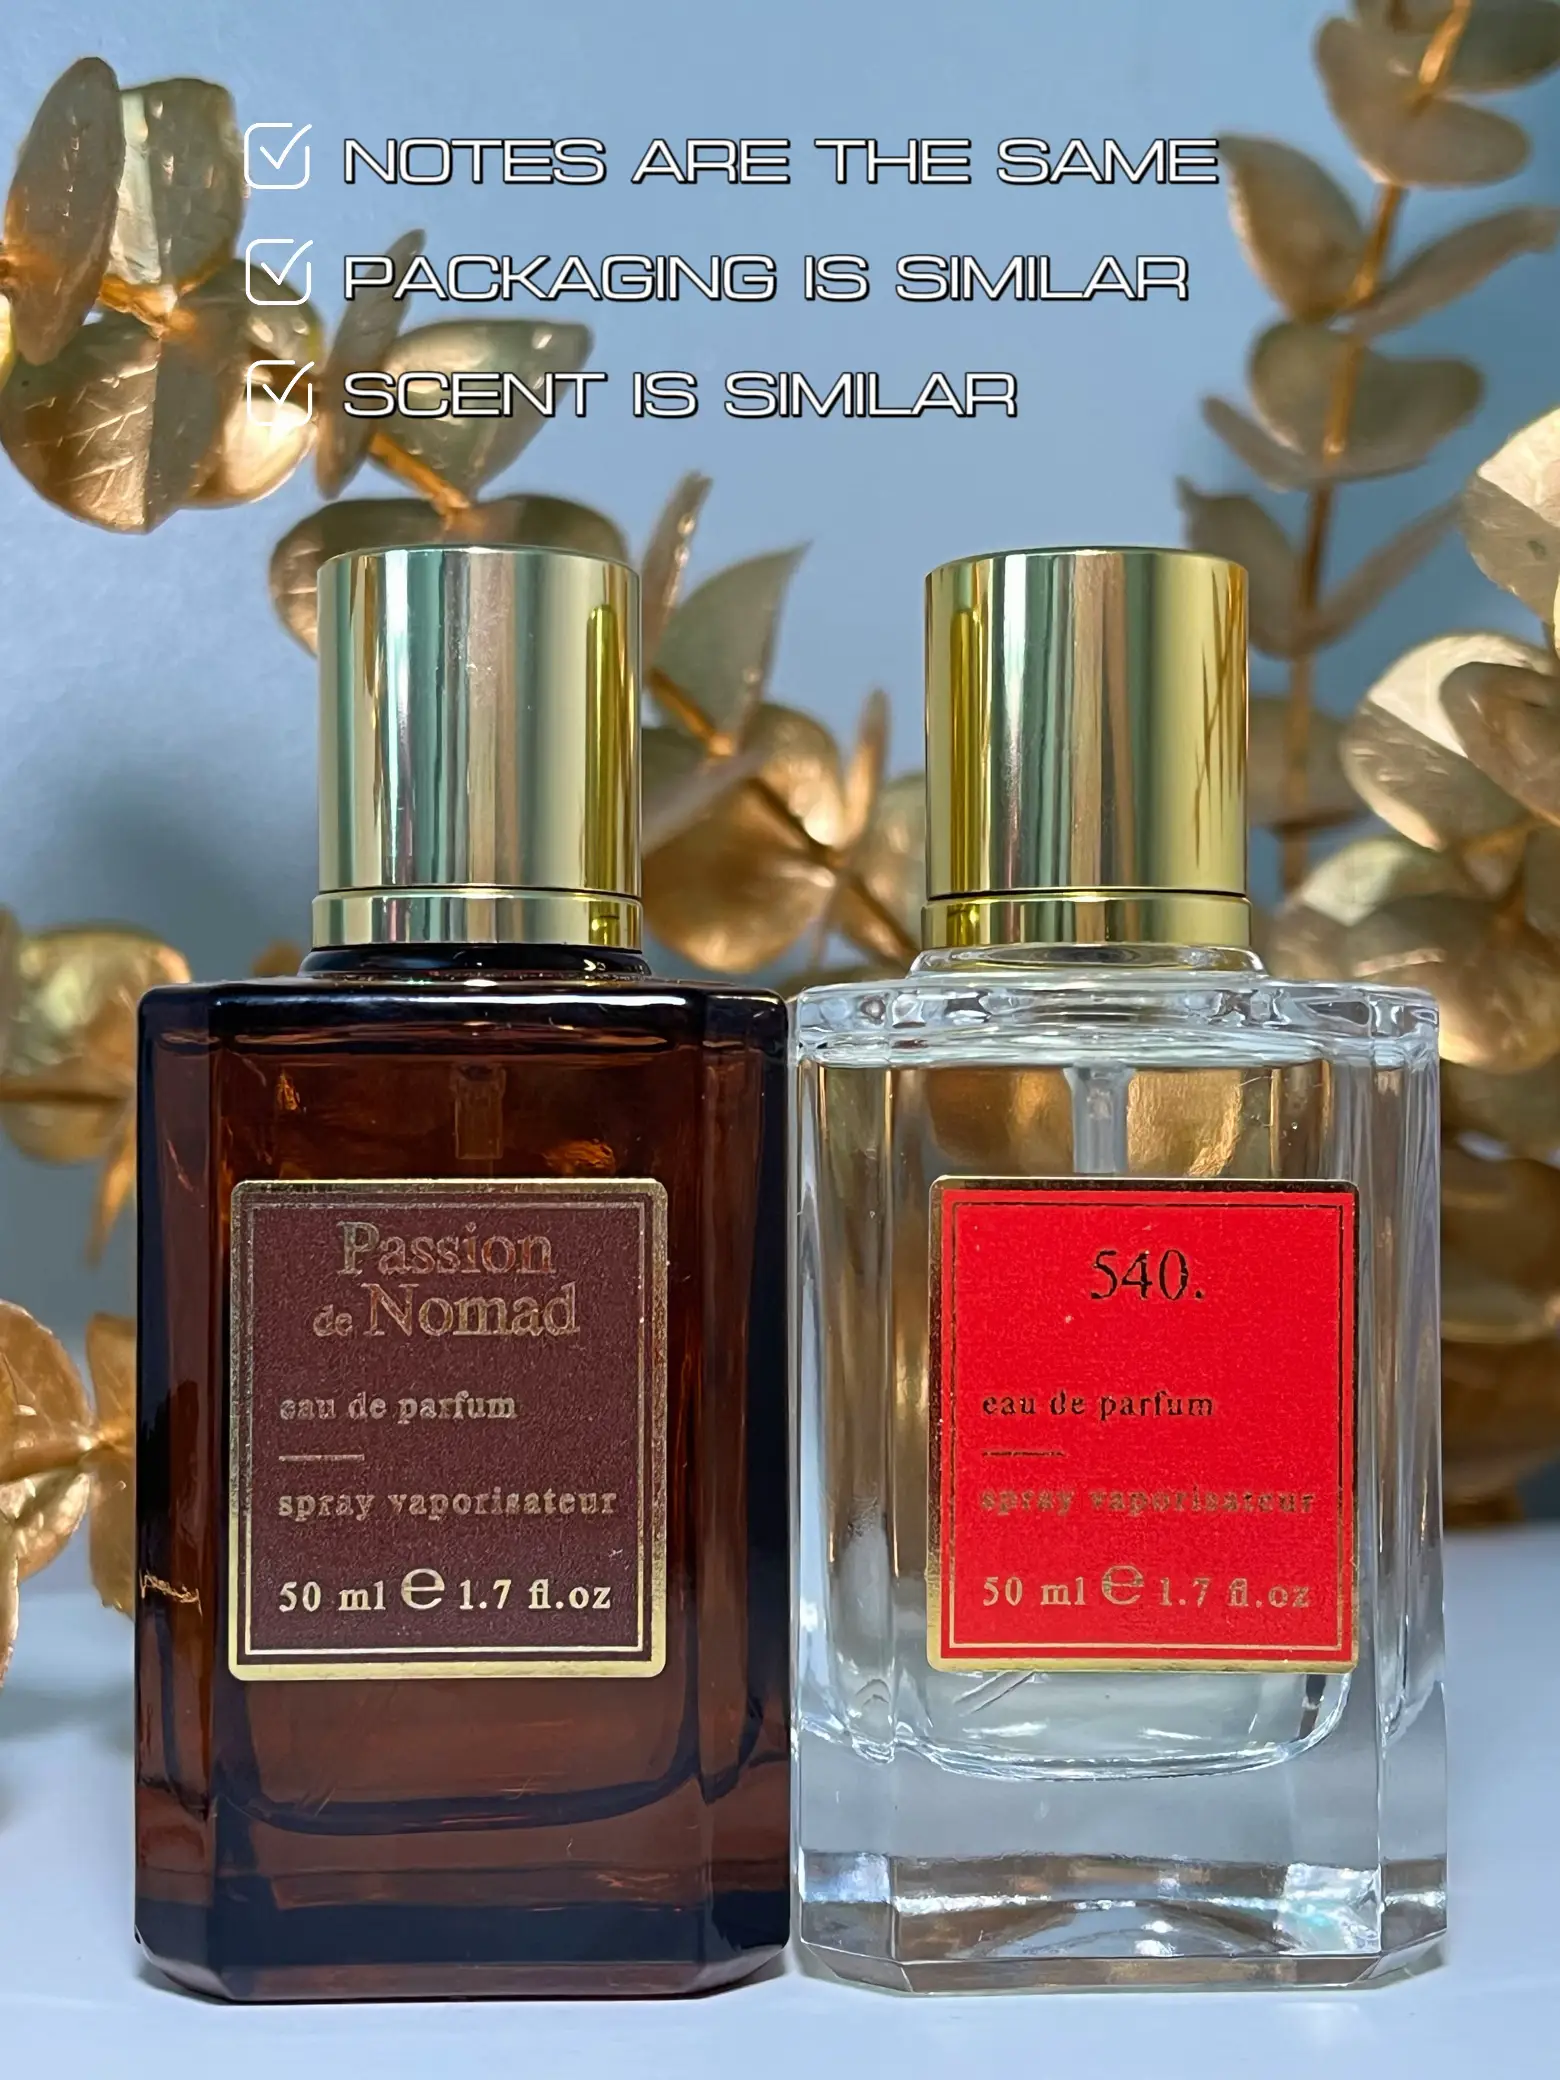 Ombre Nomade 100ML EDP Unisex Fragrance Beautiful Luxurious